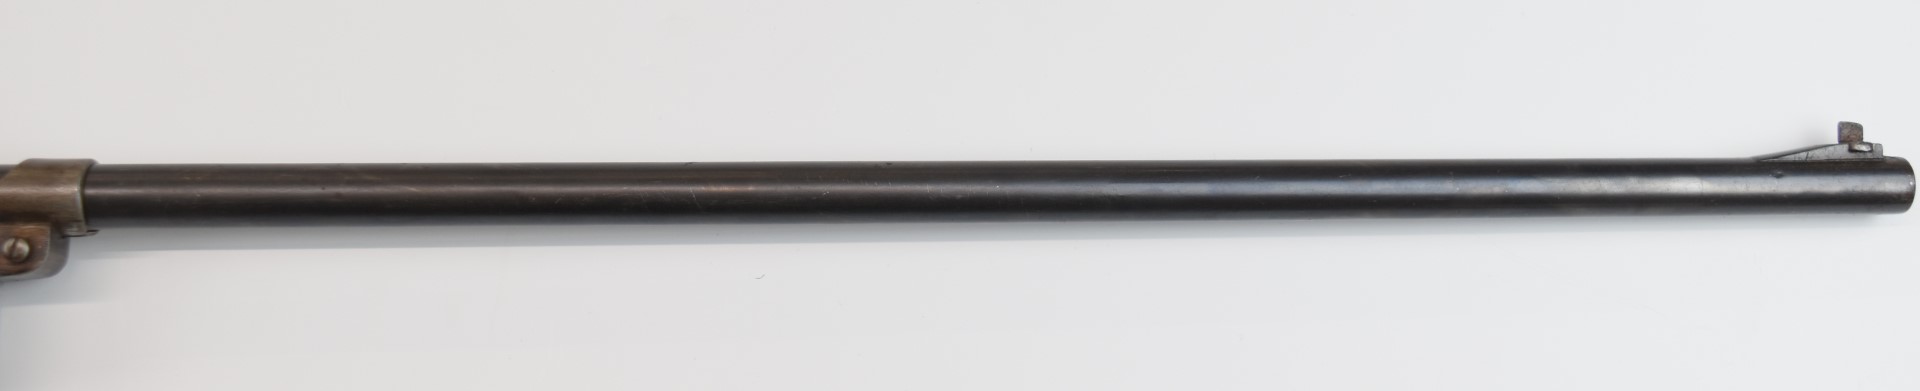 Webley Service Mk II .22 air rifle with interchangeable barrel, adjustable pop-up peep sights, - Image 5 of 15